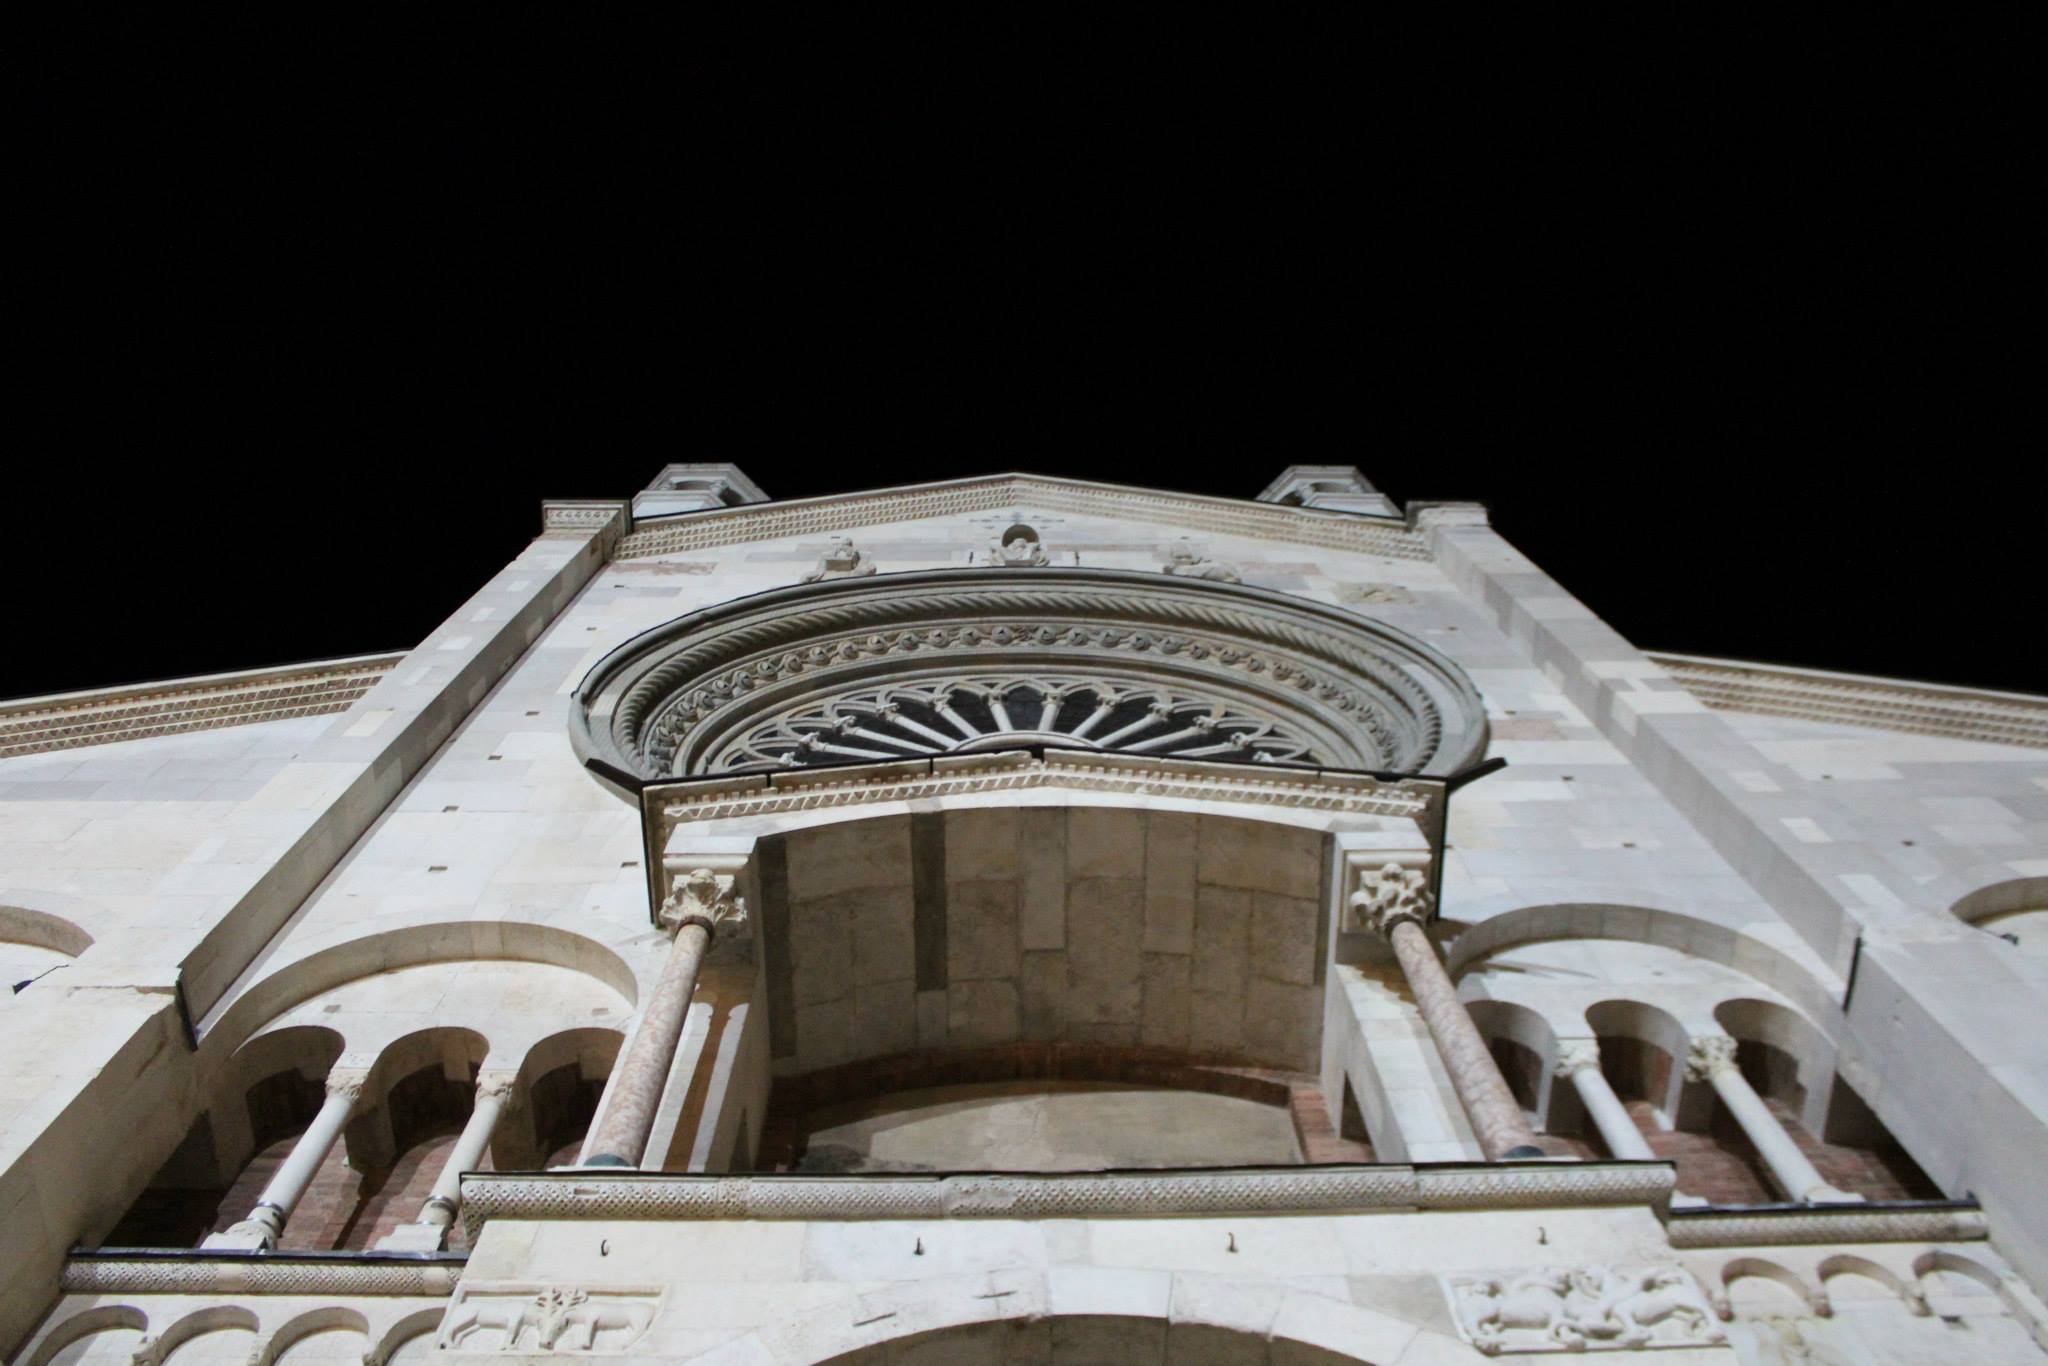 foto: https://upload.wikimedia.org/wikipedia/commons/8/8b/Duomodue.jpg